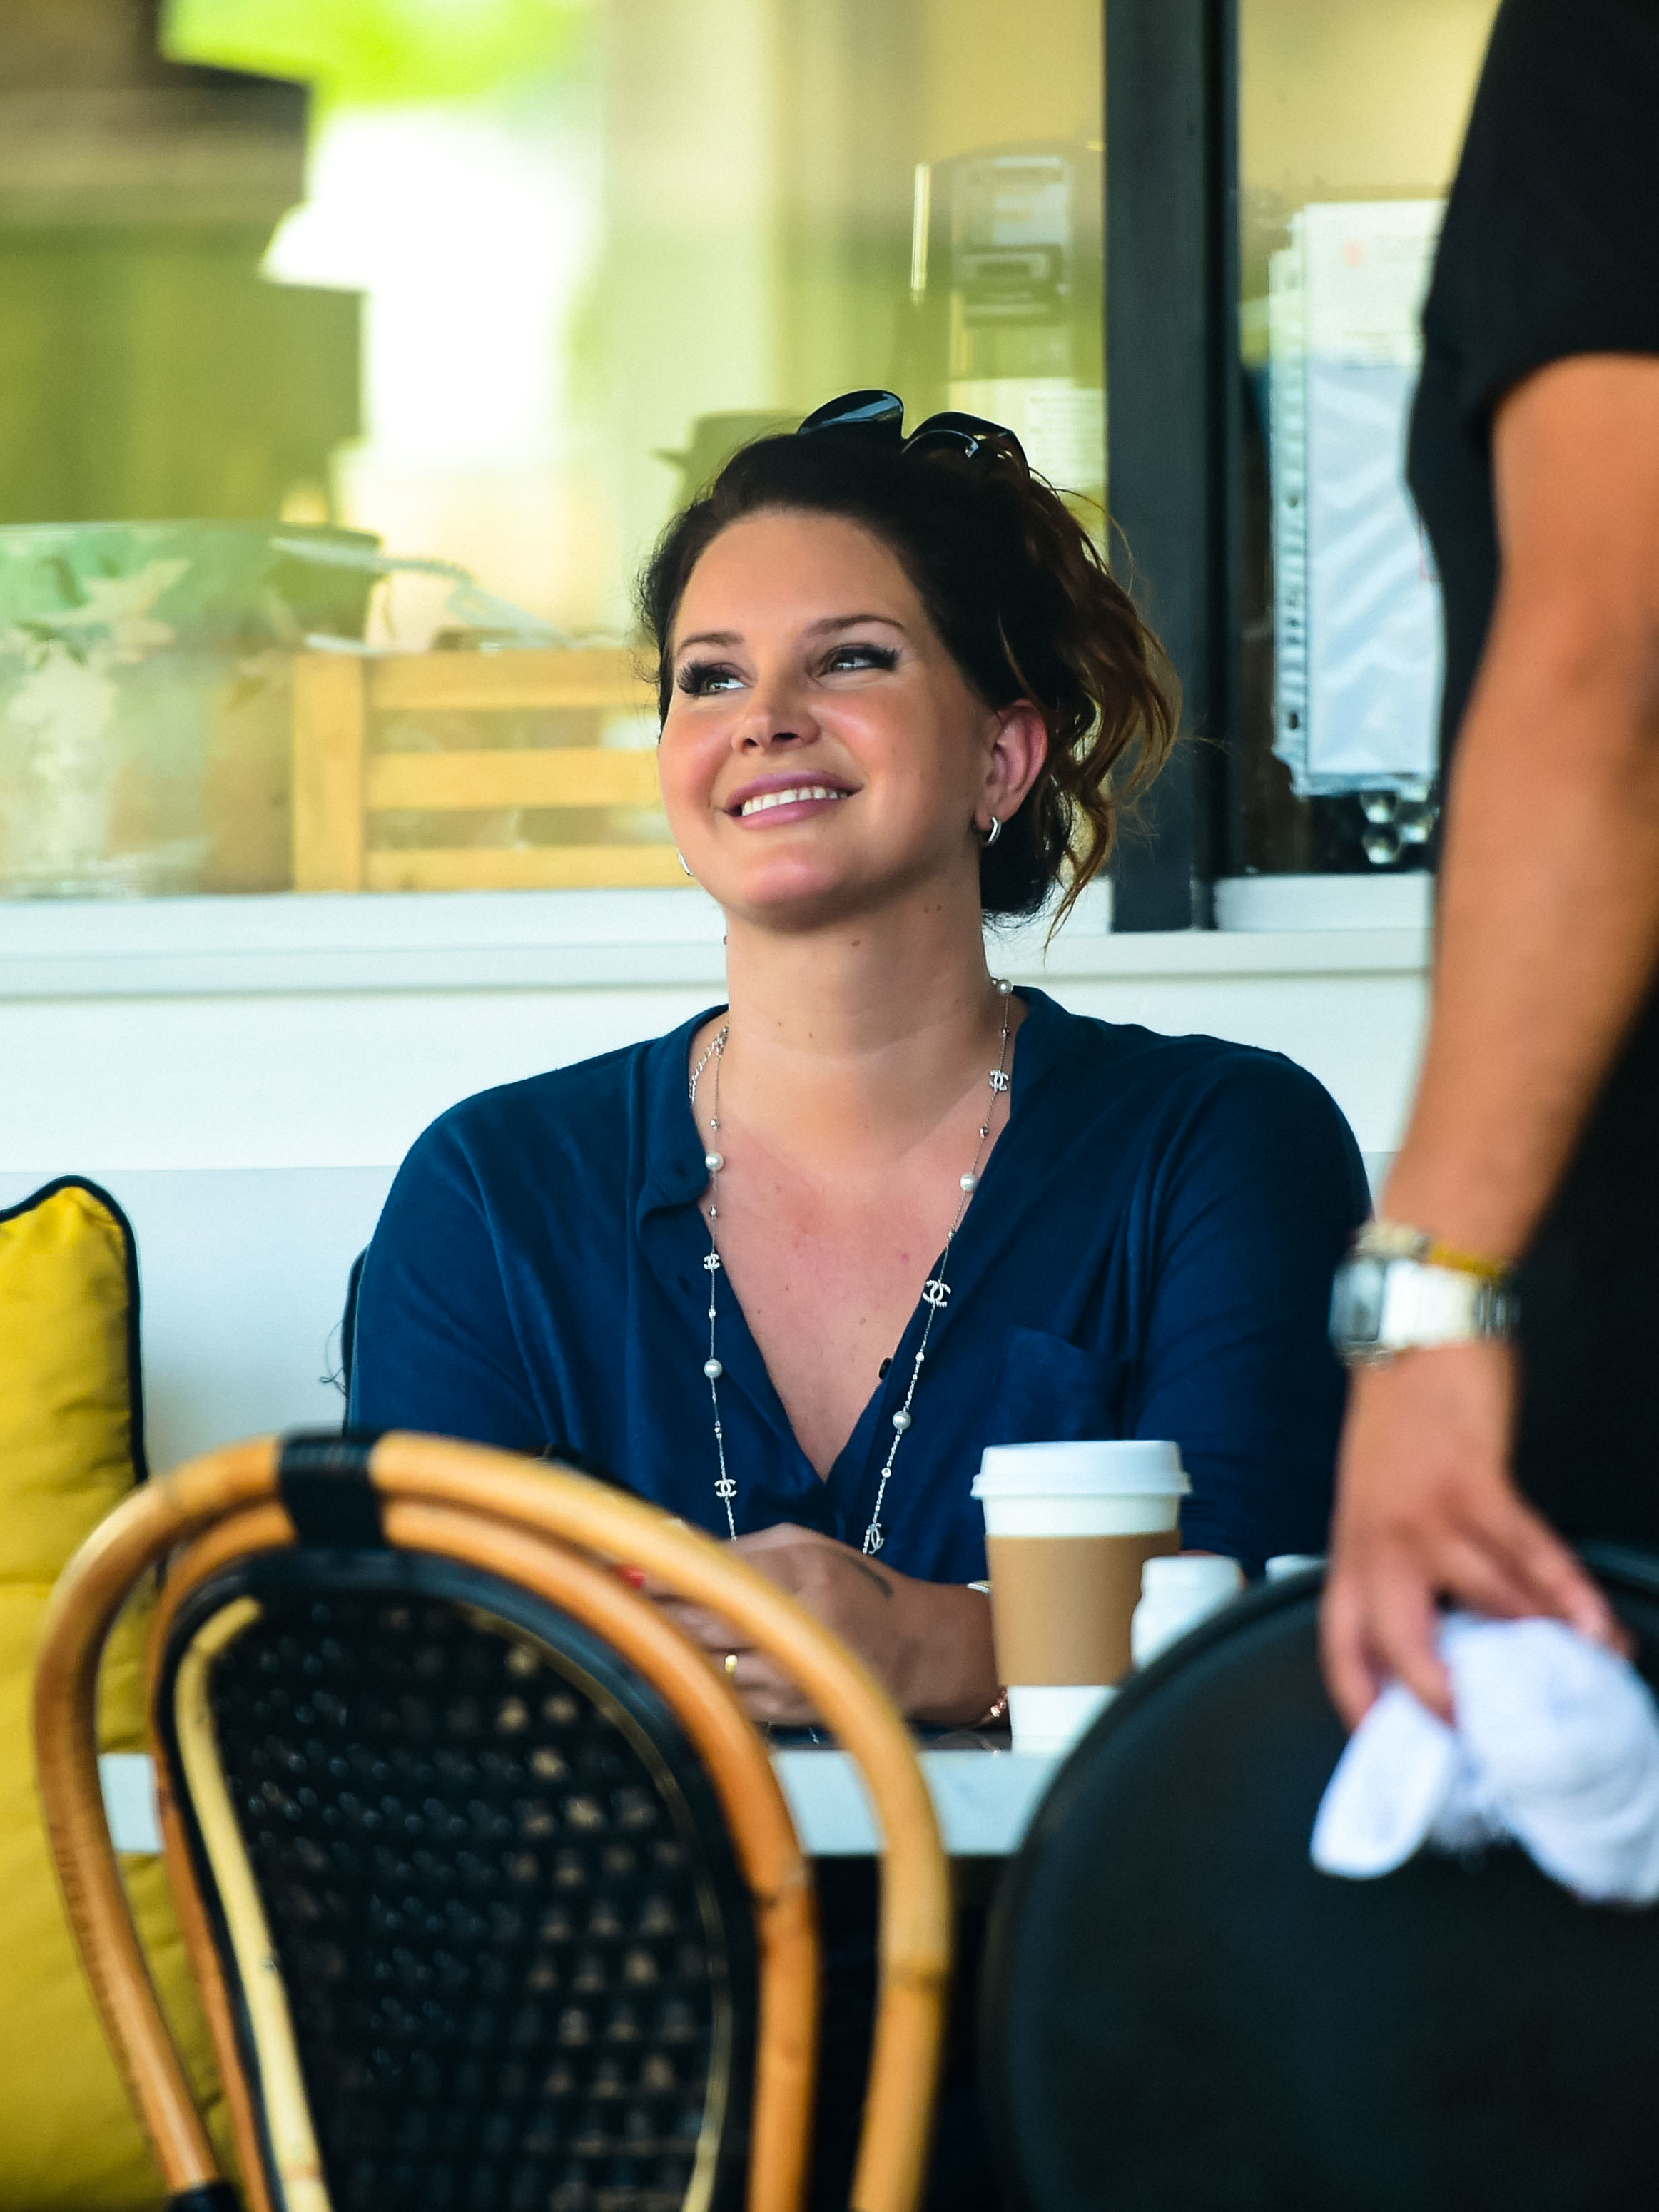 A close-up of Lana smiling